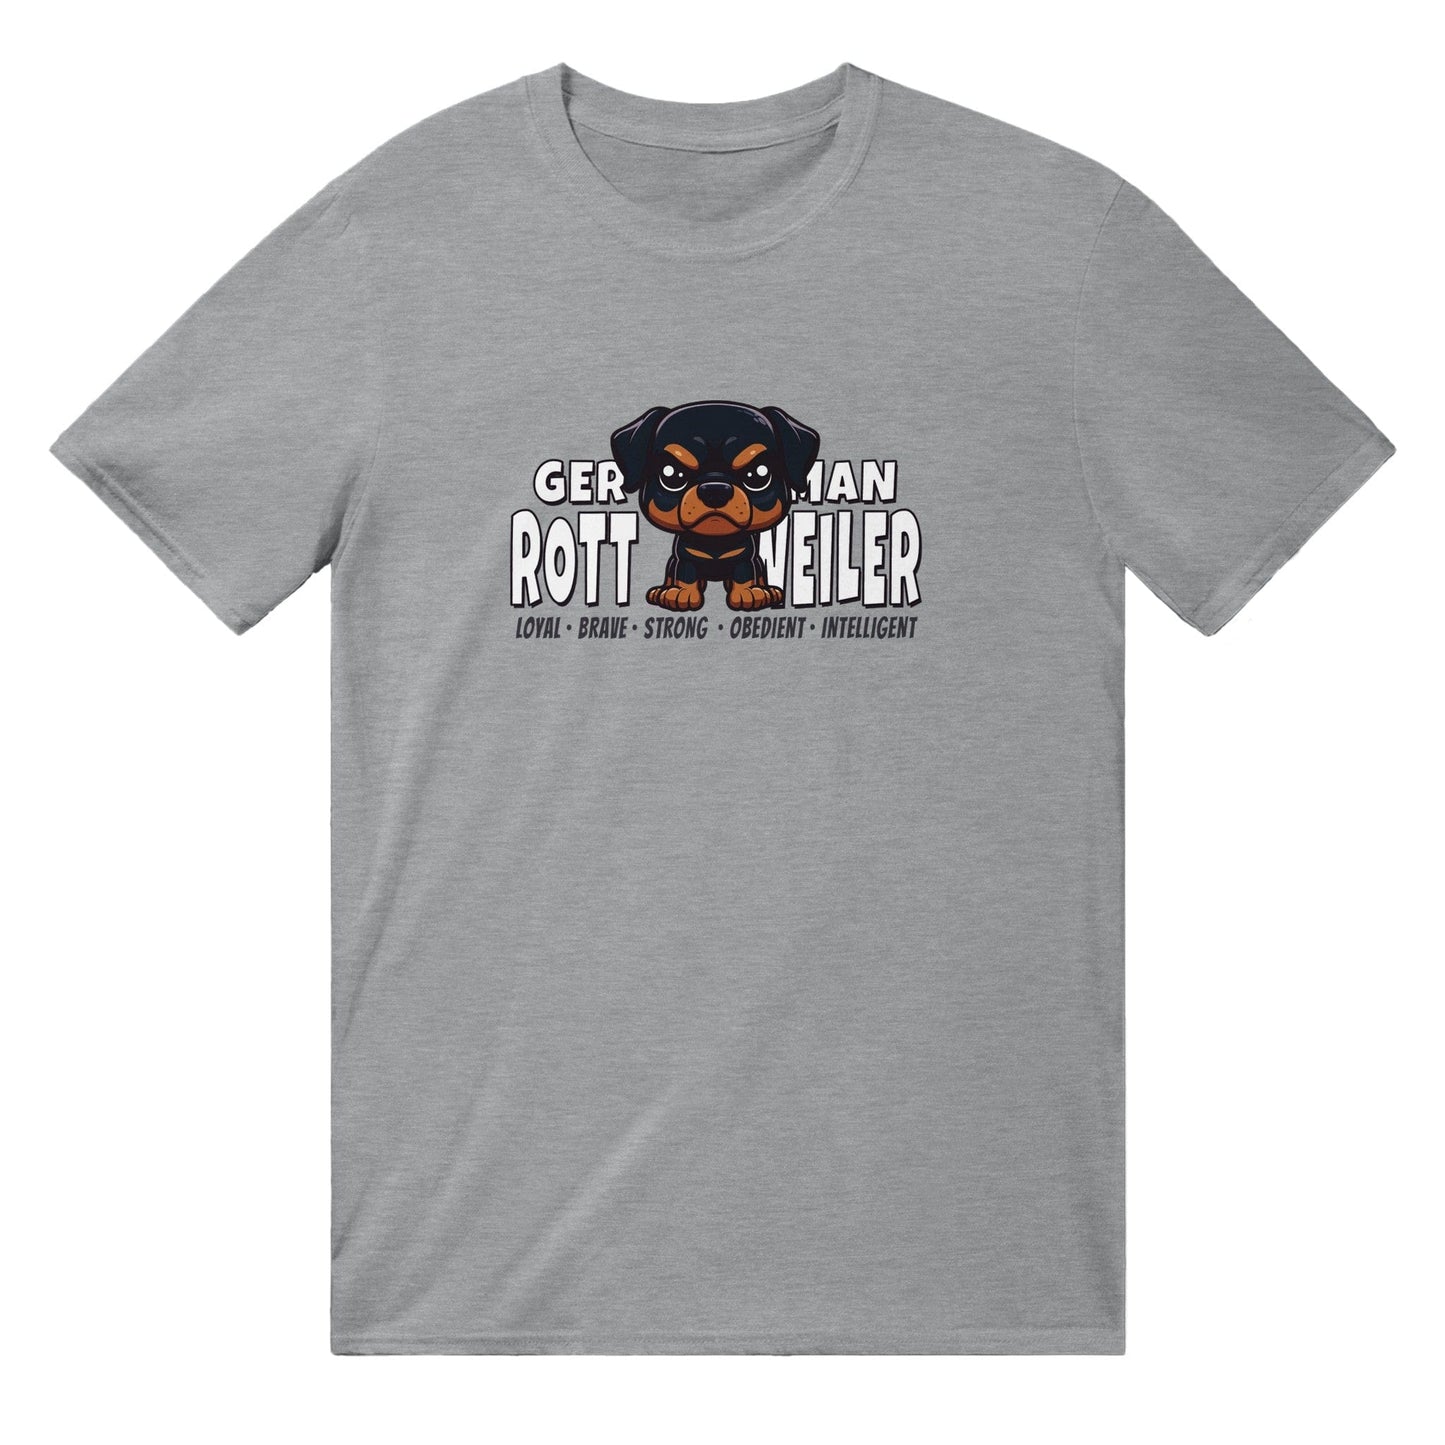 German Rottweiler T-Shirt Australia Online Color Sports Grey / S